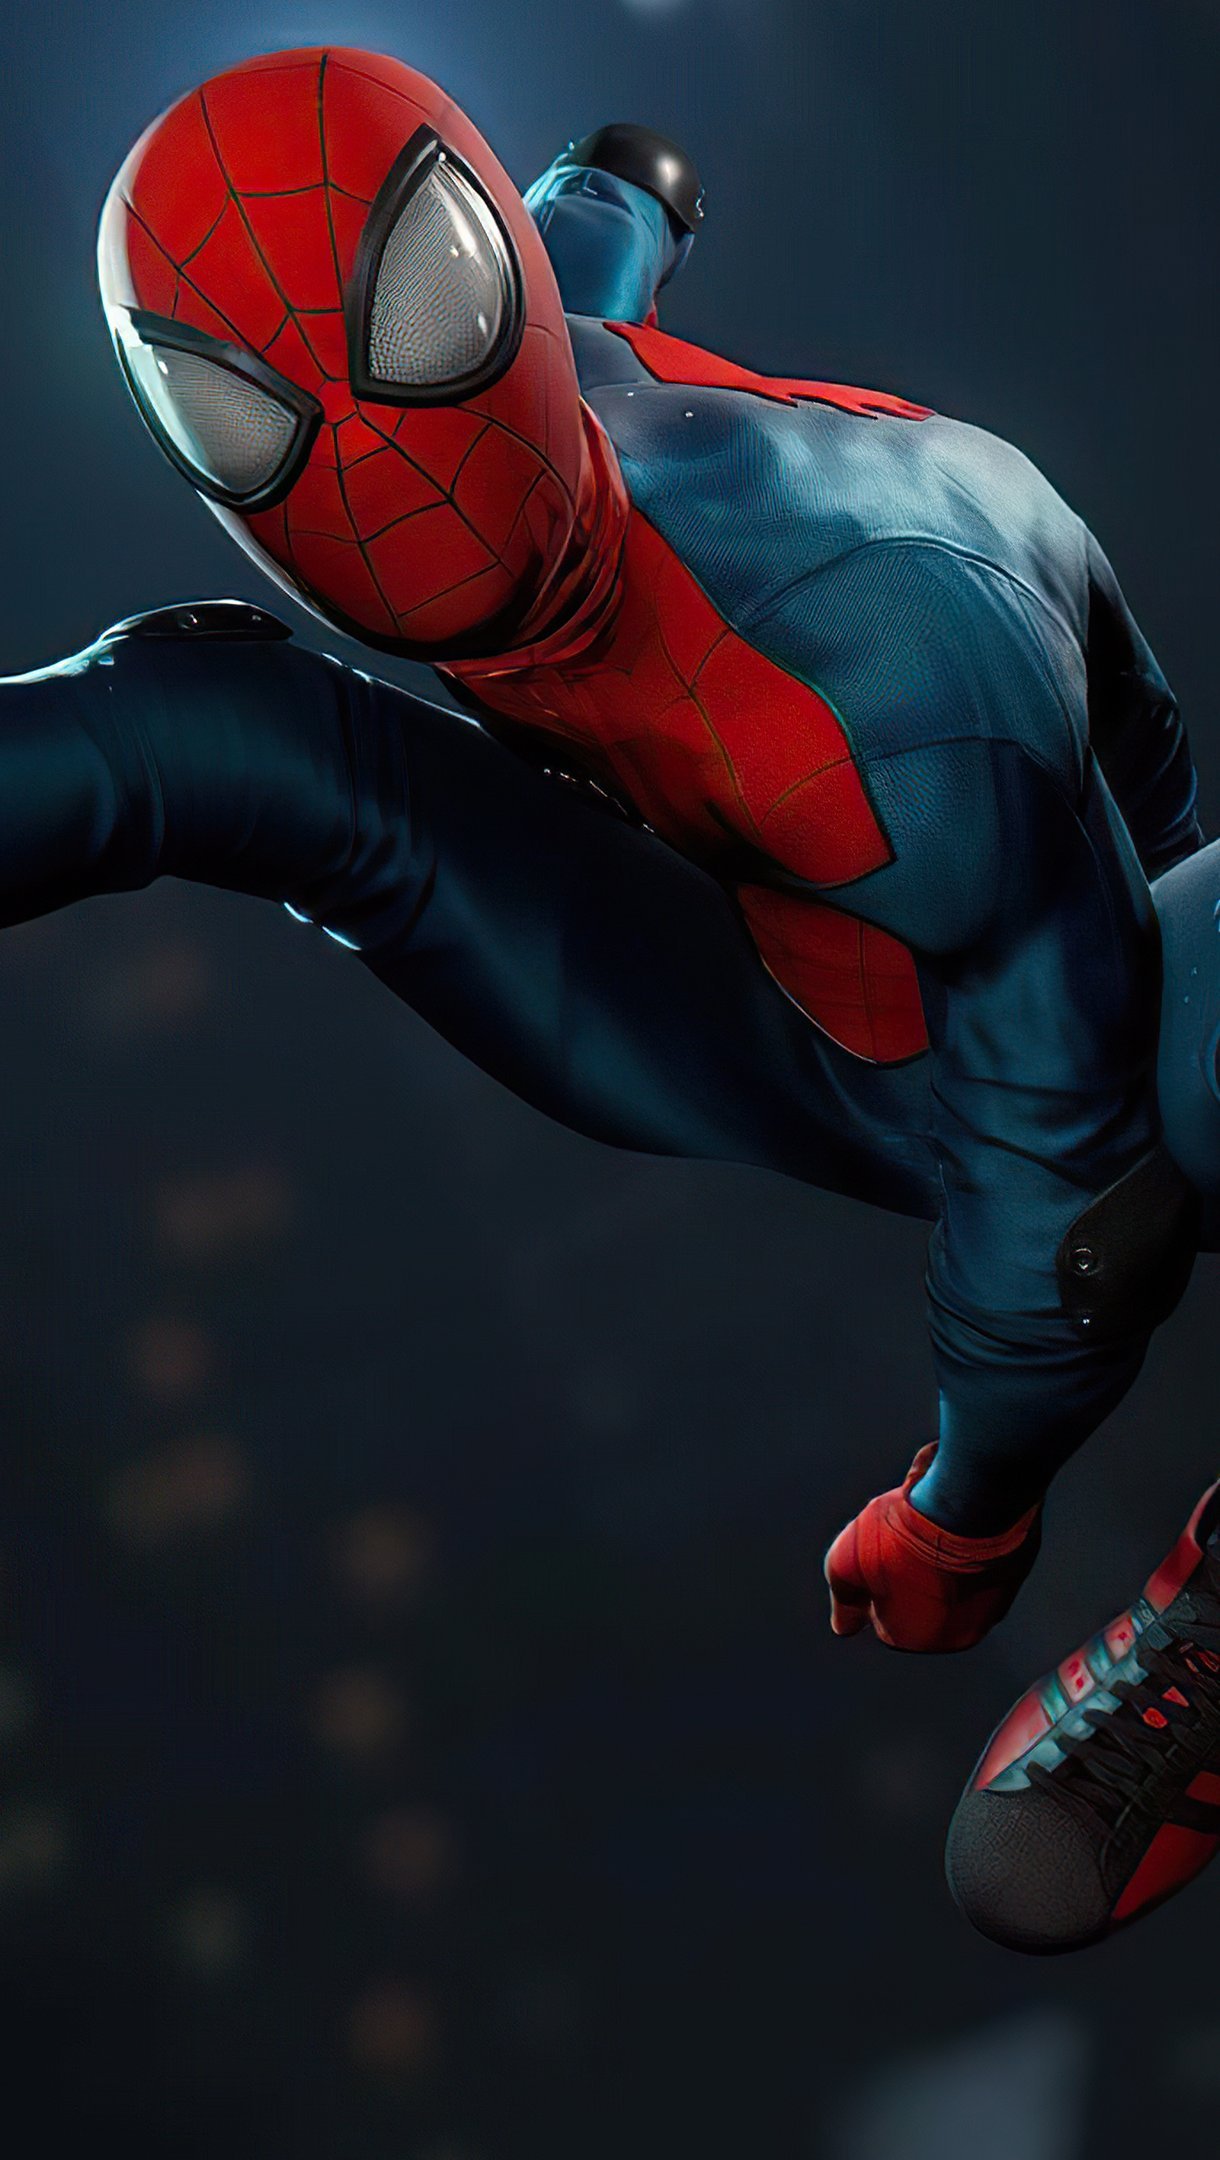 Spiderman remasterizado Fondo de pantalla 4k Ultra HD ID:8765